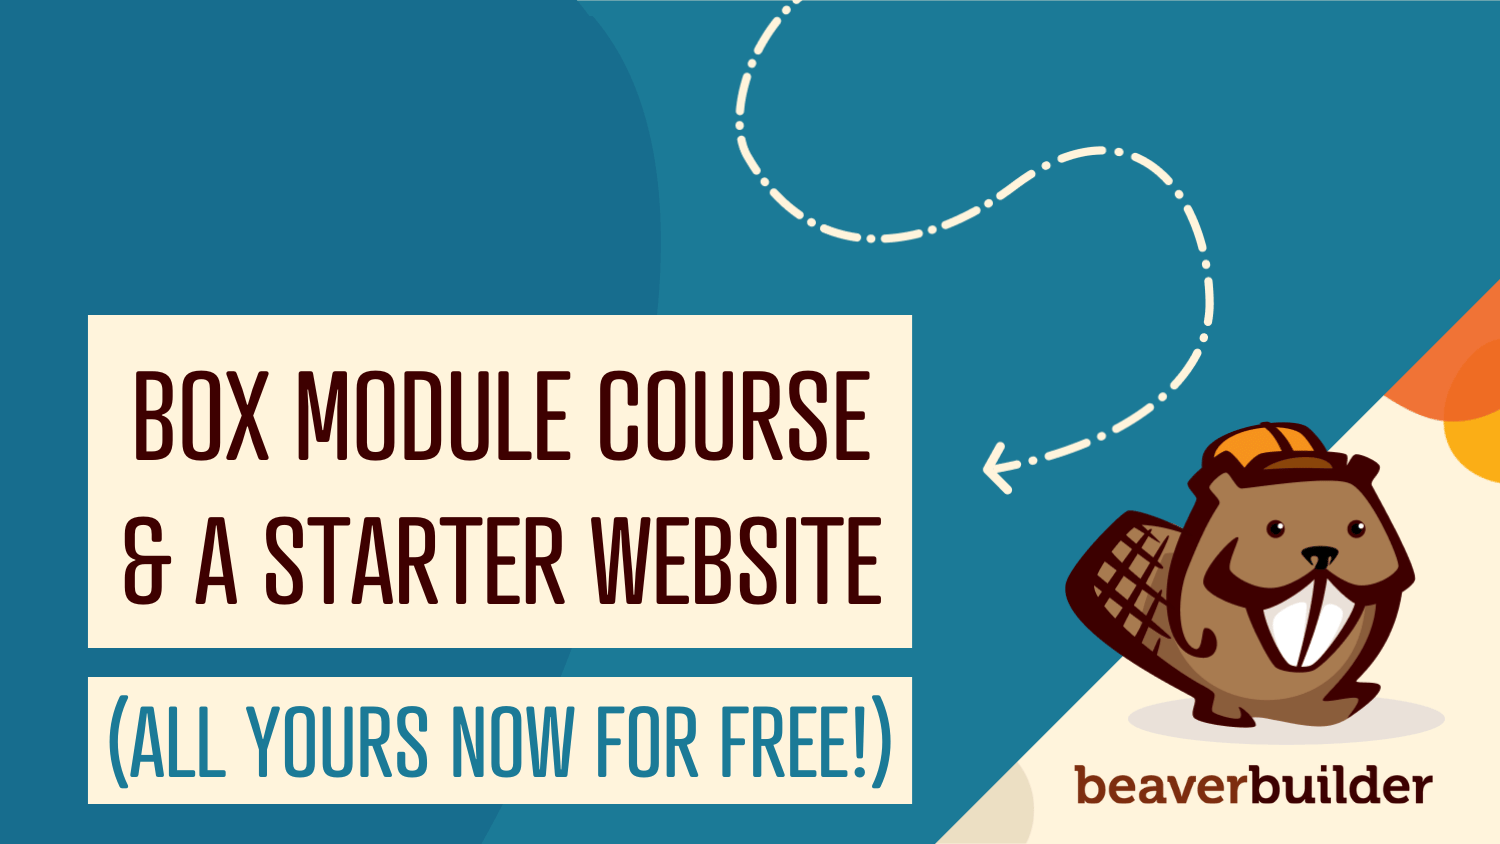 Box Module Course and Beaver Builder Starter Website